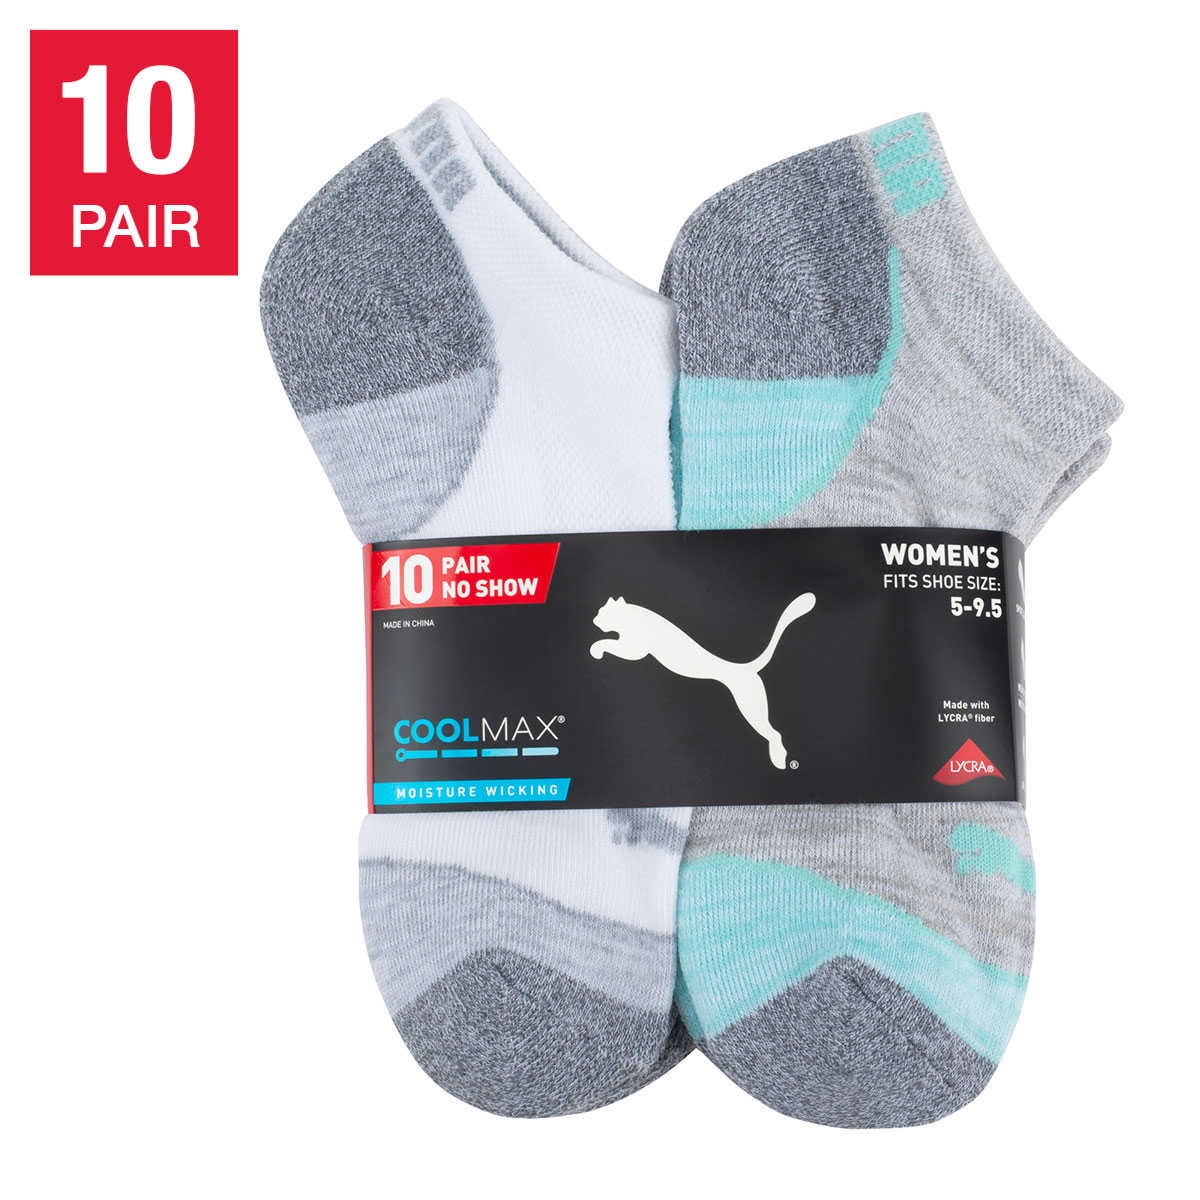 factible feo Recomendación Puma Ladies 10 Pair CoolMax No Show Socks (White) - Walmart.com